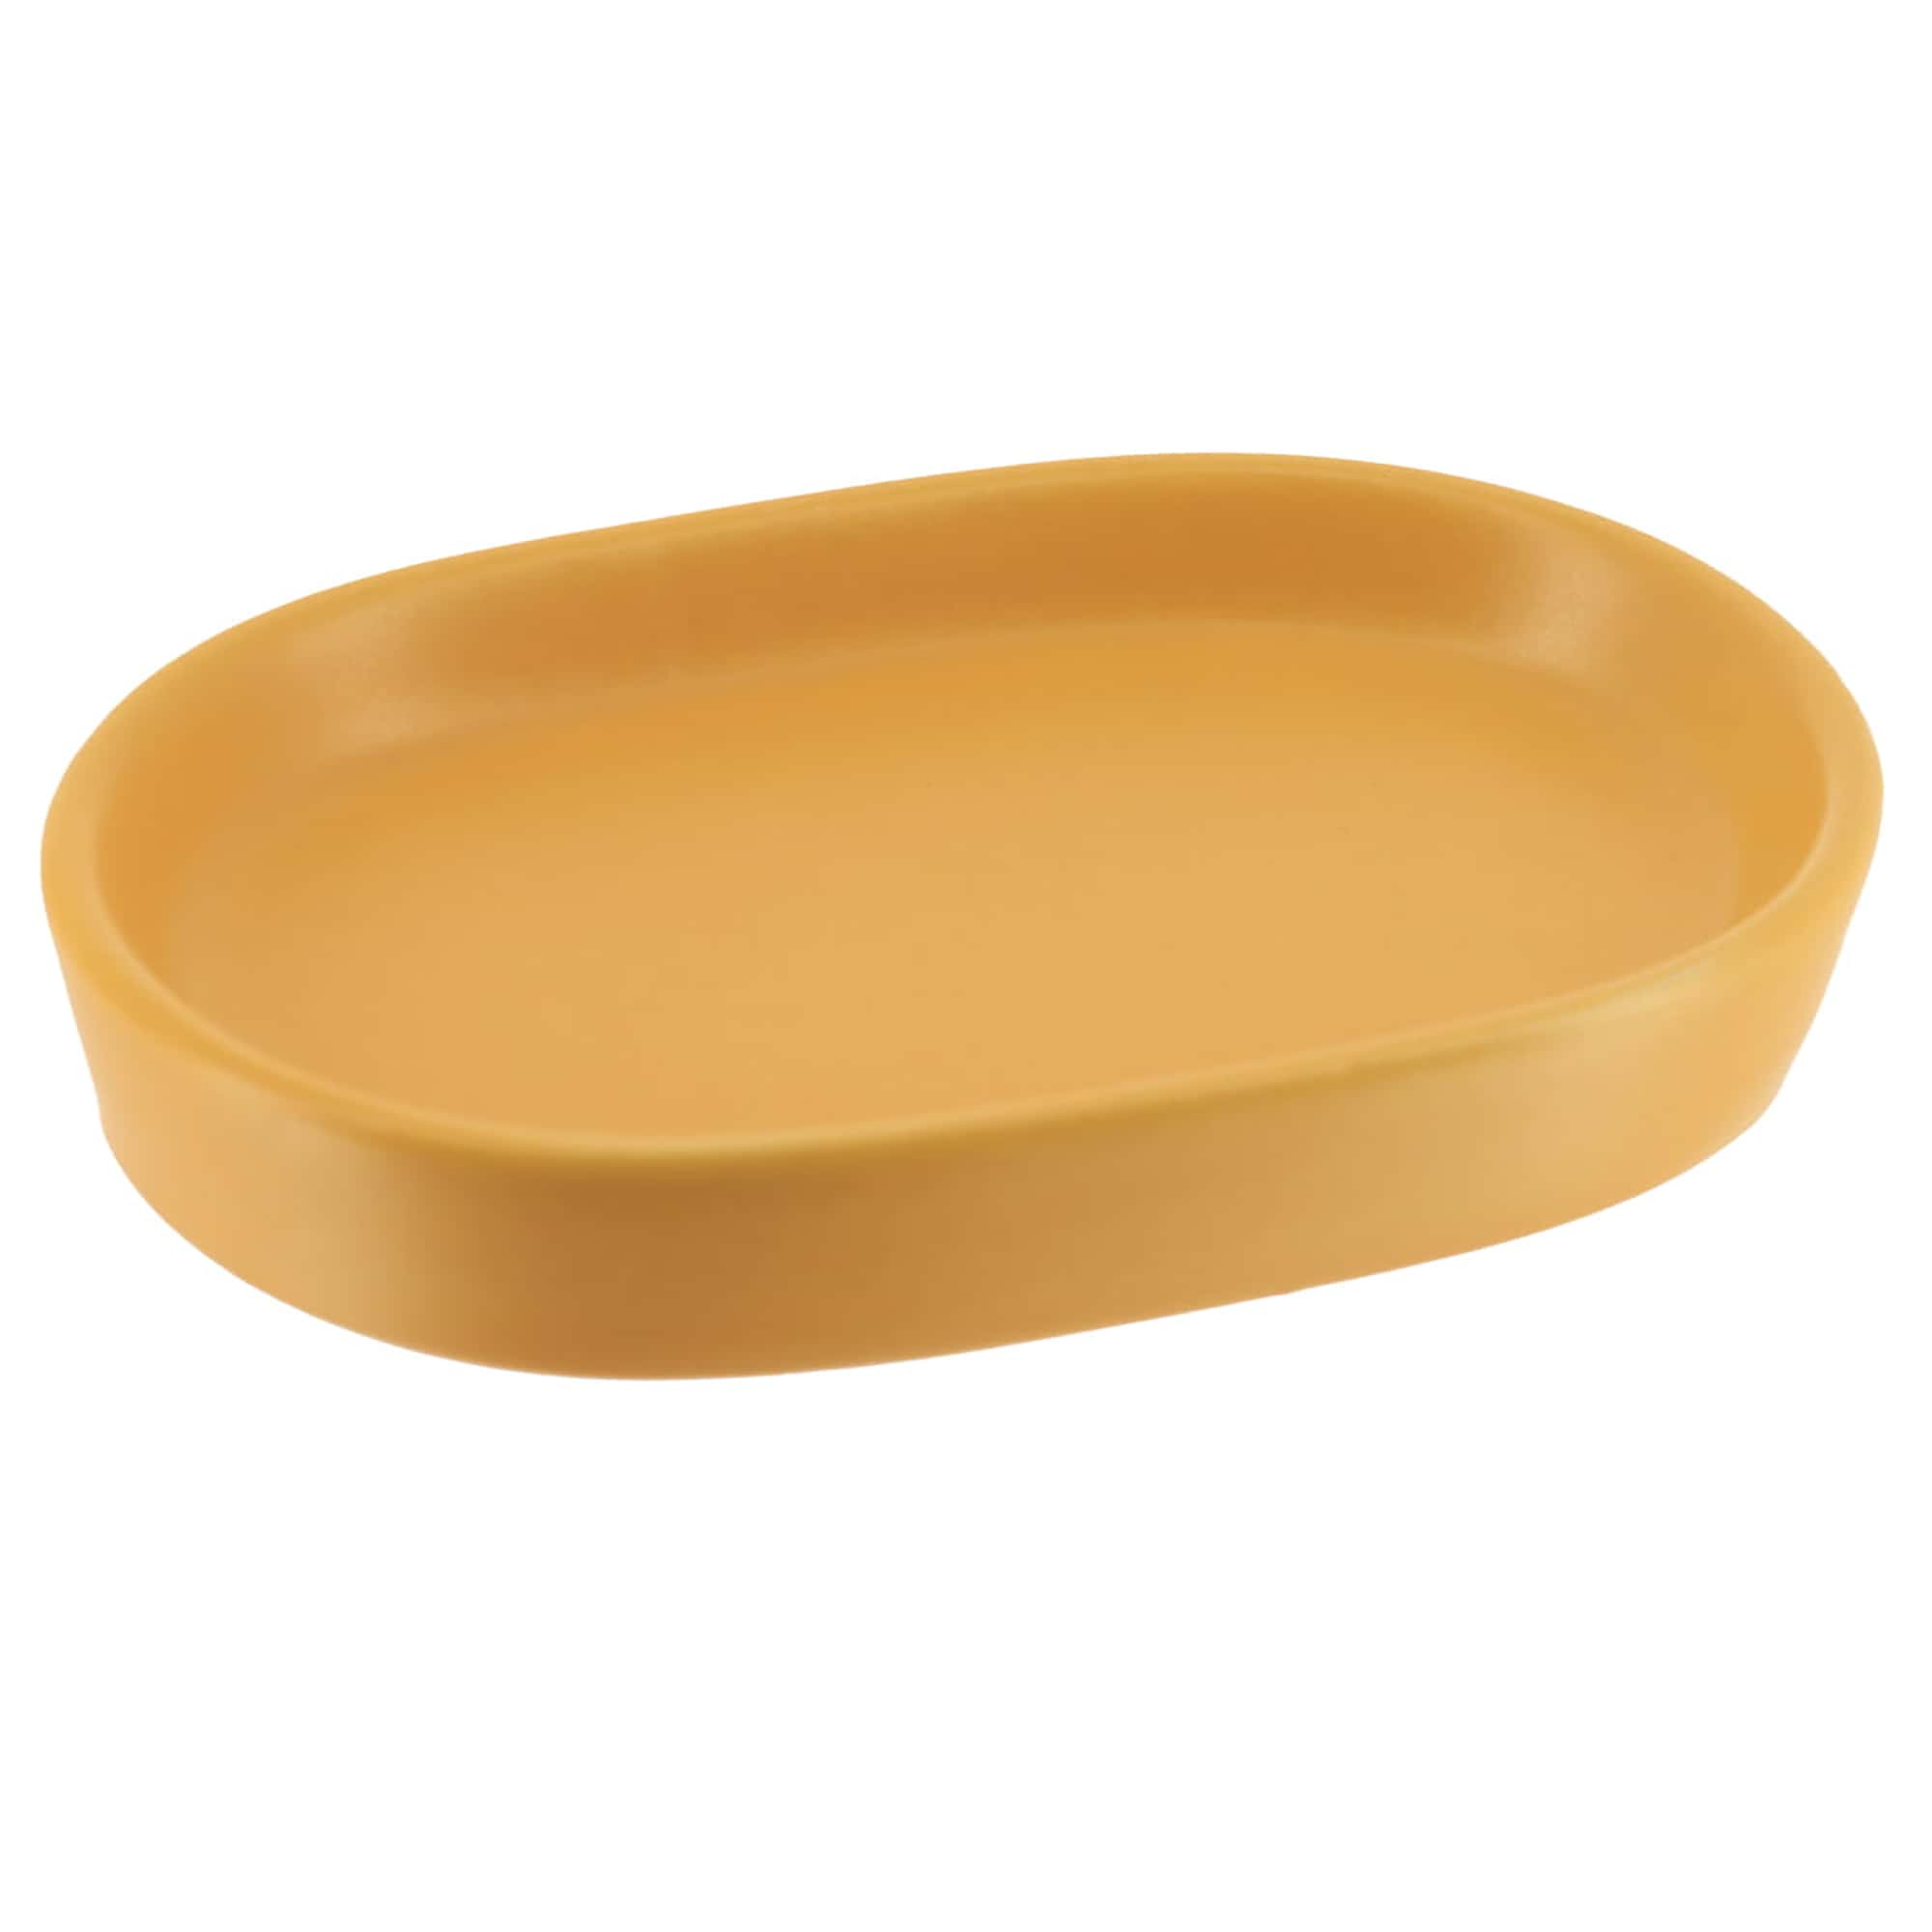 Vibrant-Stoneware-Soap-Dish-Cup-in-Yellow-Mustard